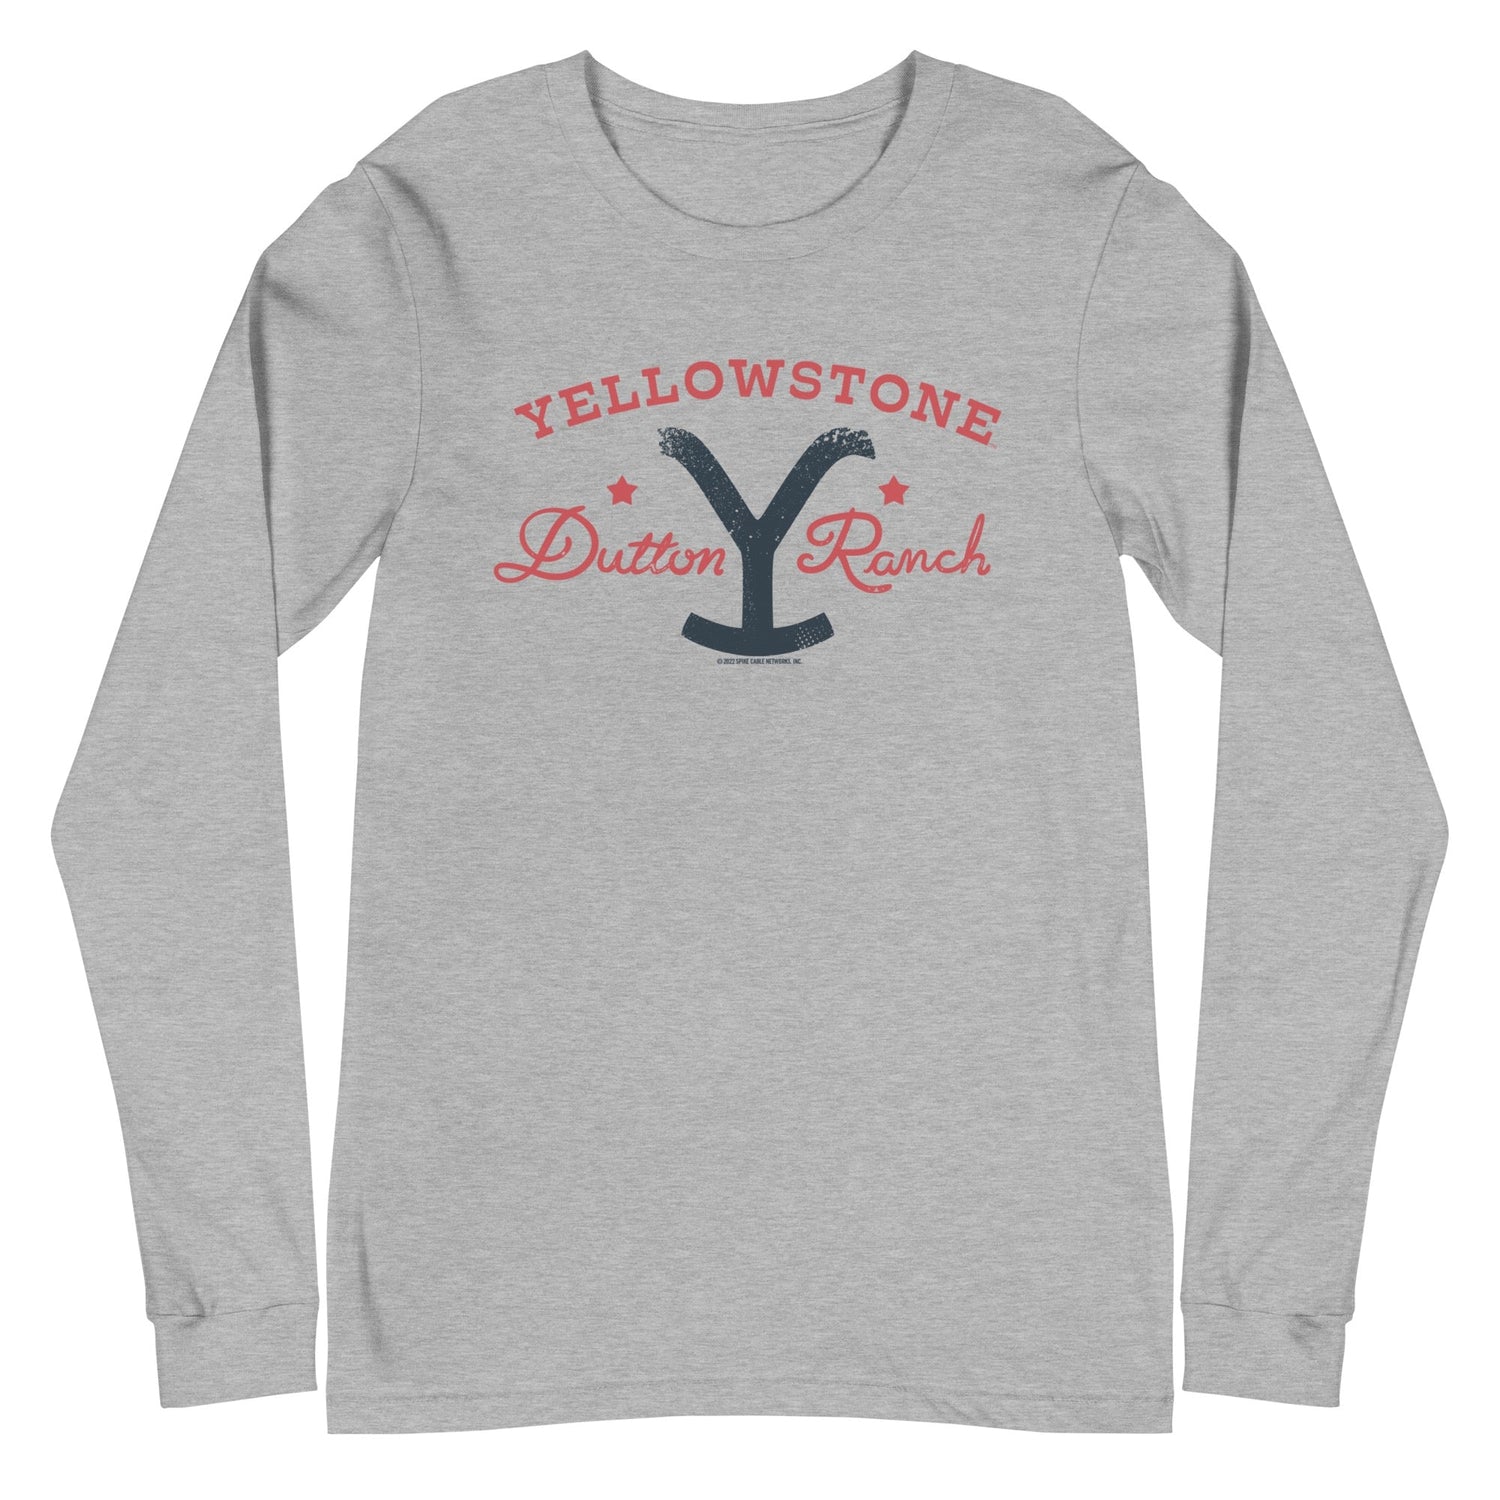 Yellowstone Dutton Ranch Star Adult Long Sleeve T - Shirt - Paramount Shop